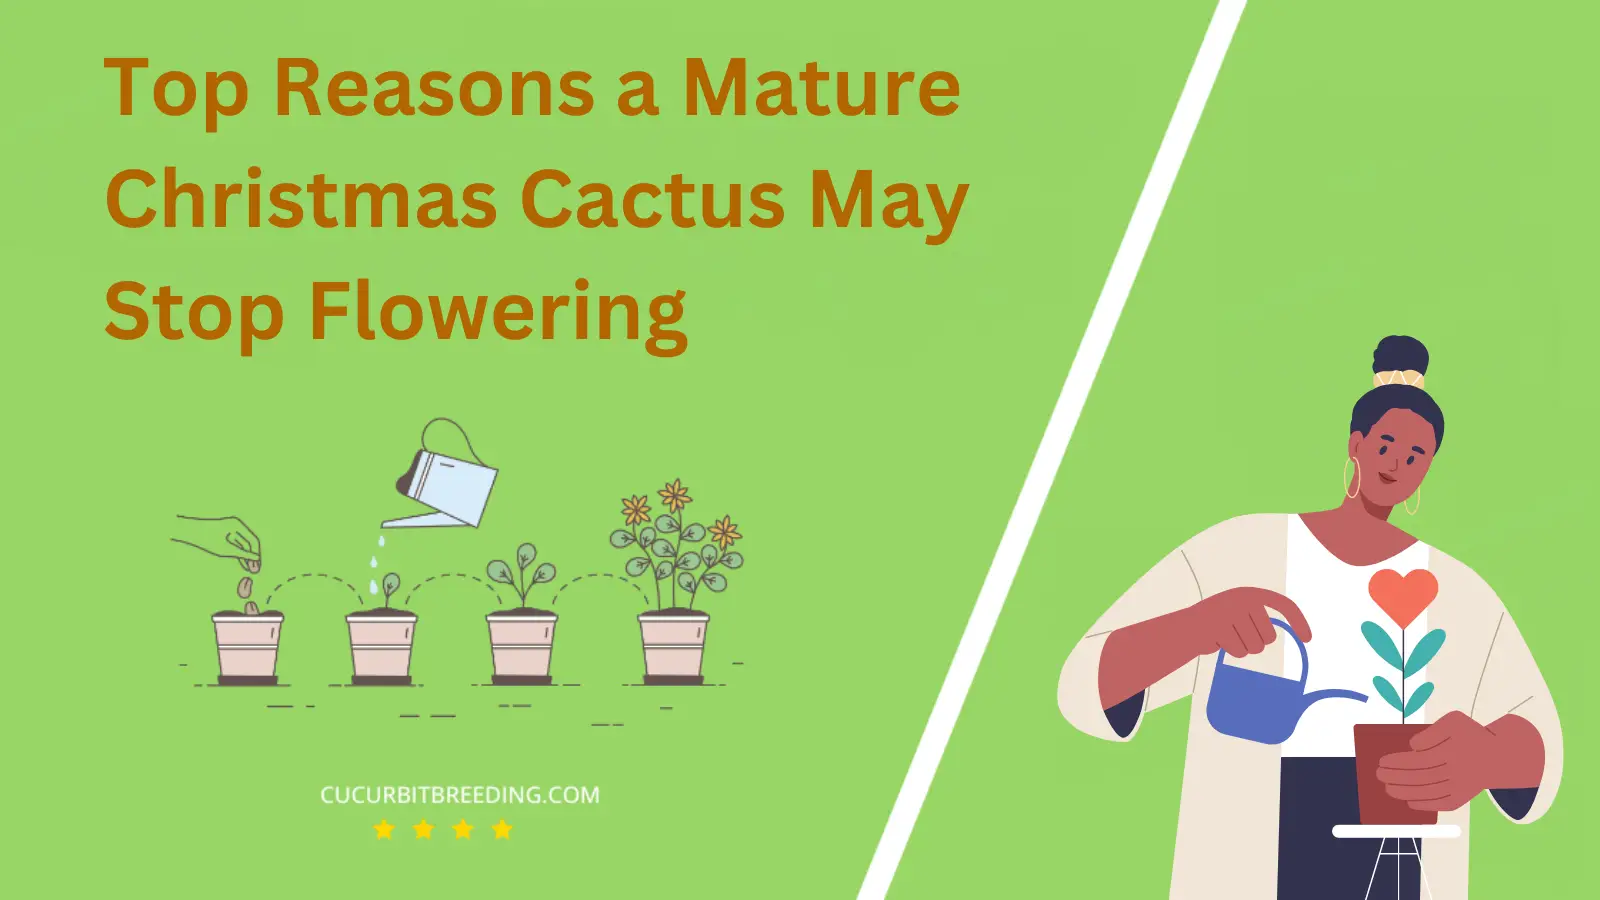 Top Reasons a Mature Christmas Cactus May Stop Flowering